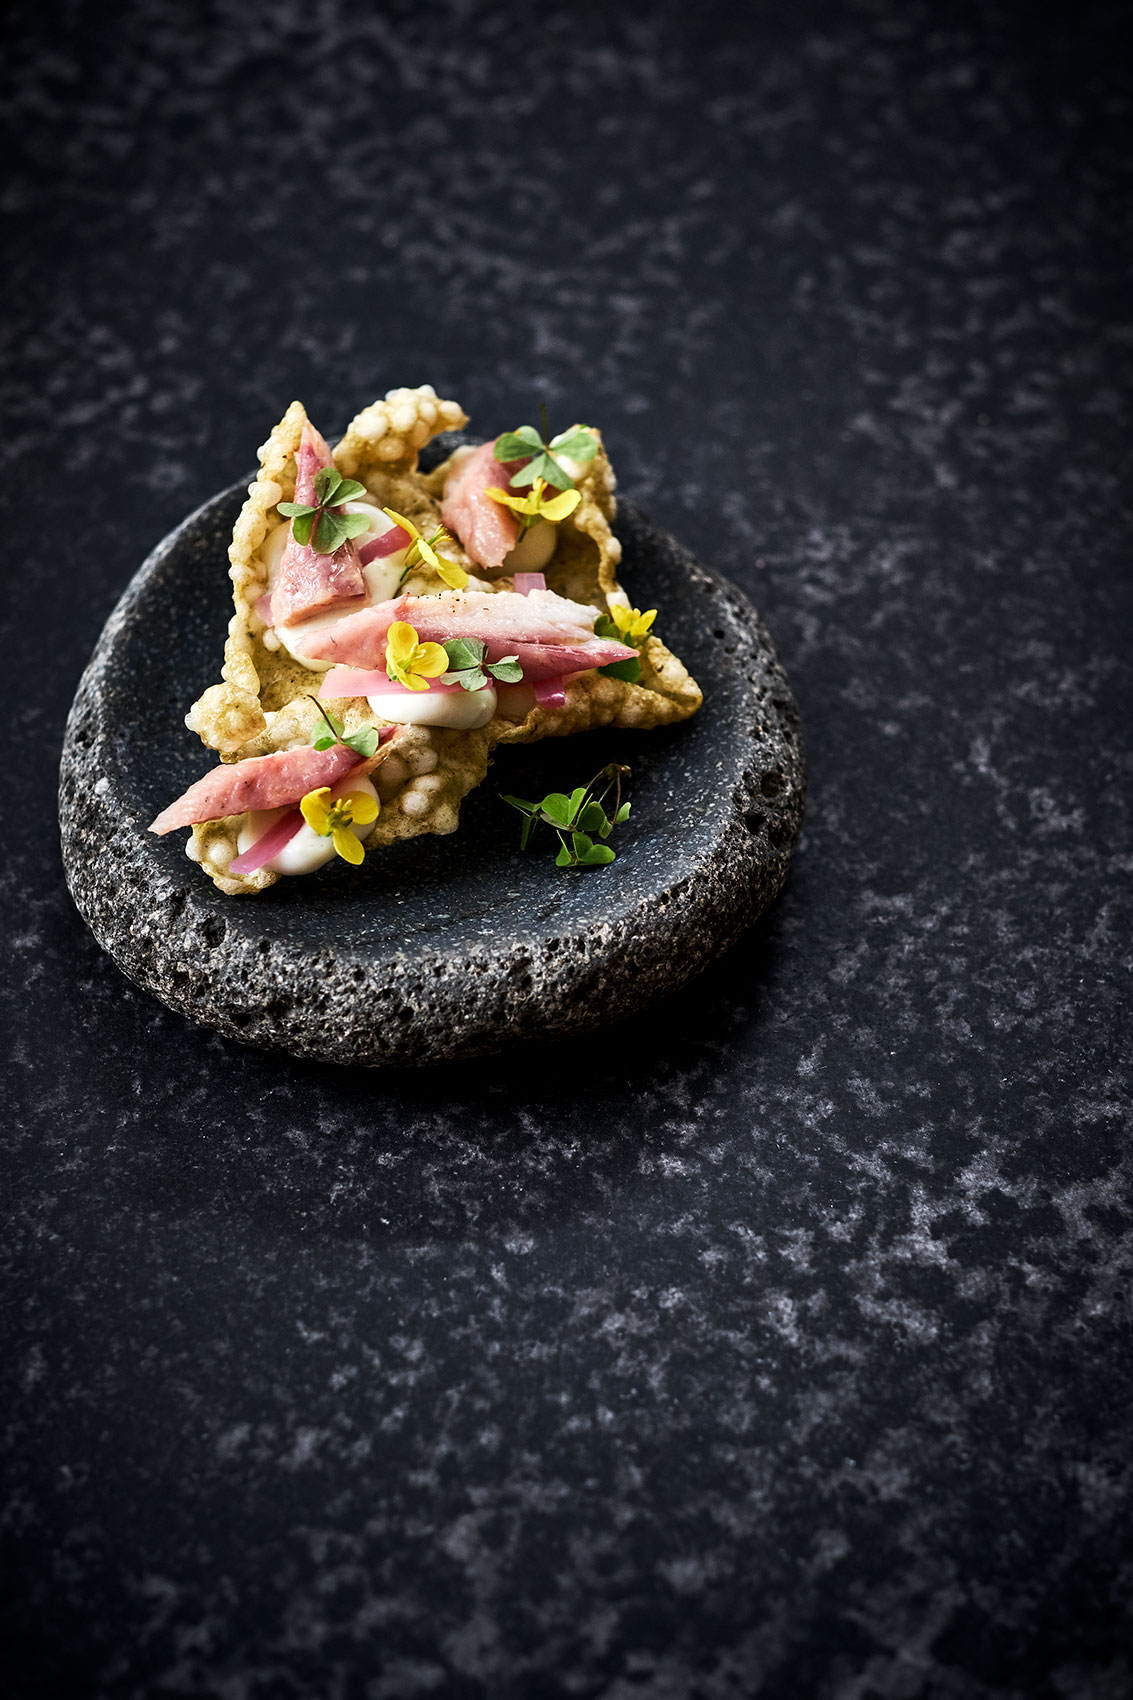 Hiakai • New Zealand Eel & Fried Nori Seaweed Crackers • Lifestyle & Hospitality Food Photography